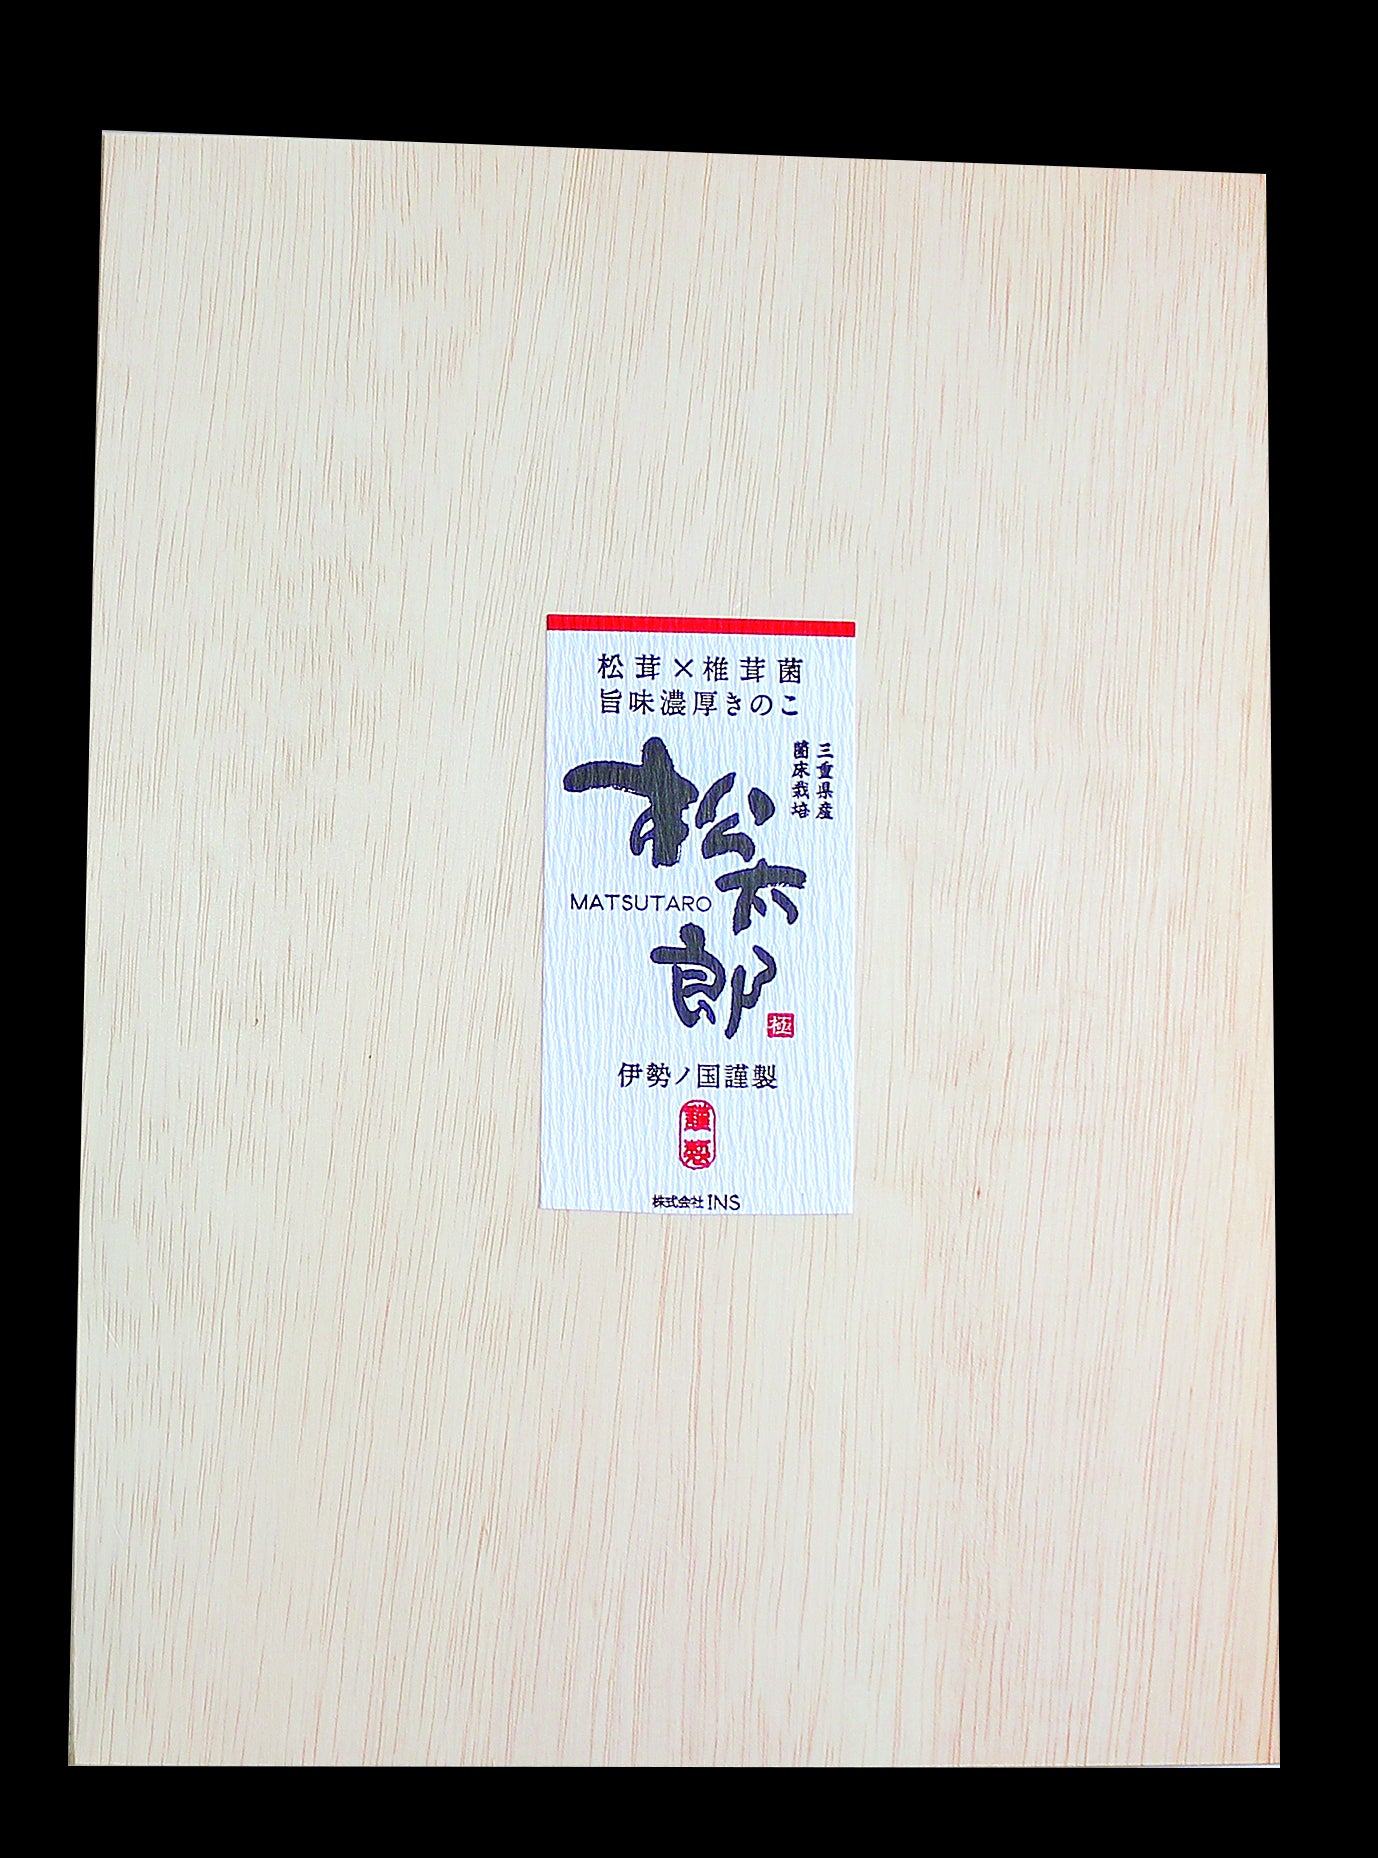 Matsutaro gift in wooden box 450g (12-14 pieces)